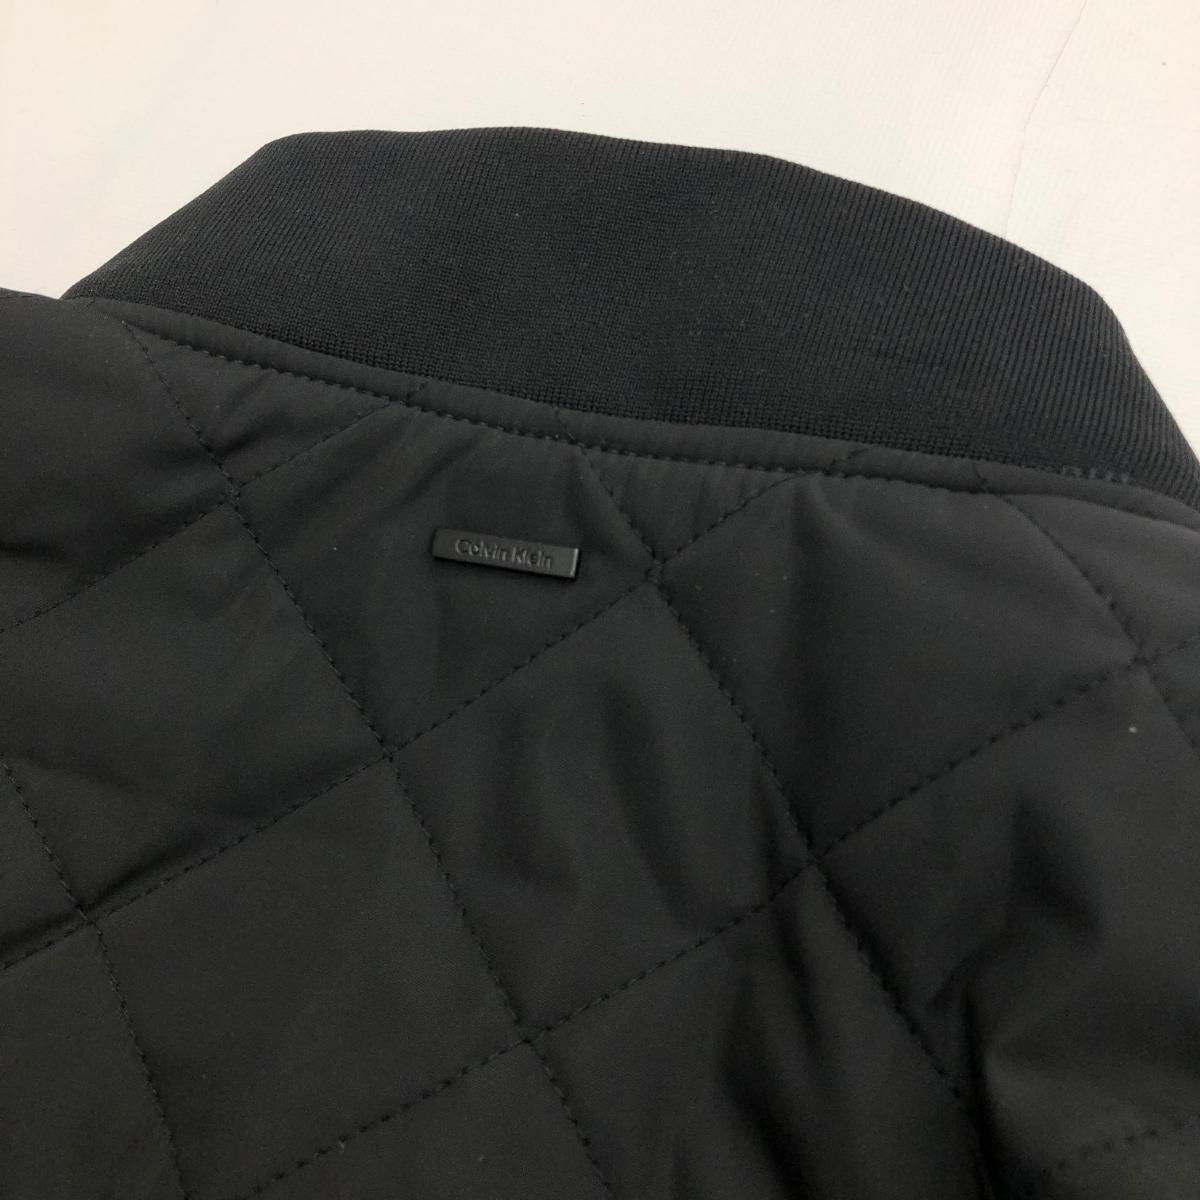  unused goods *CALVIN KLEIN Calvin Klein Bomber jacket S* black men's outer 